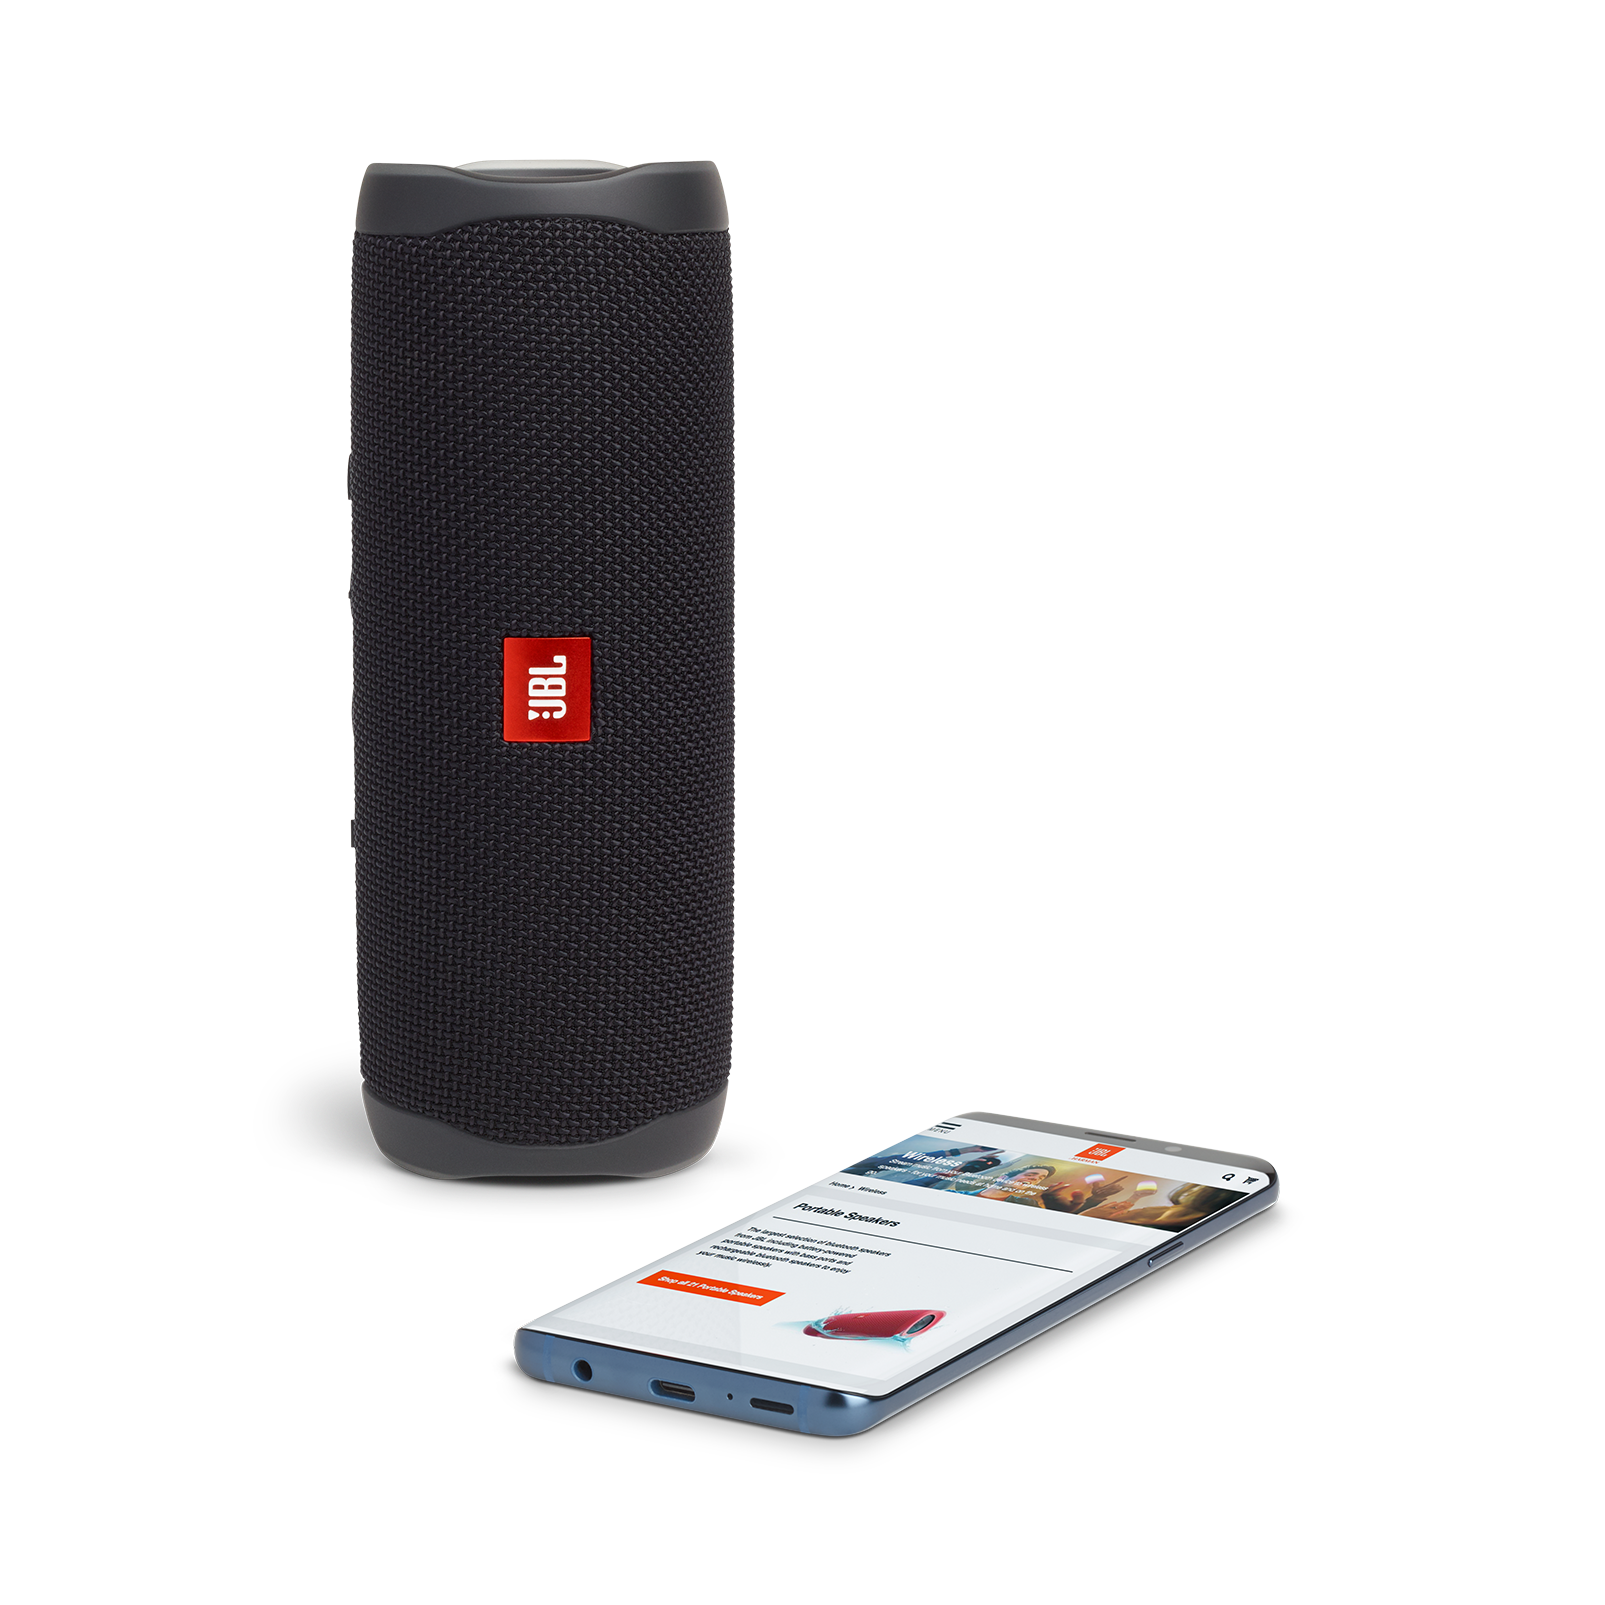 JBL Flip 5 - Black Matte - Portable Waterproof Speaker - Detailshot 2